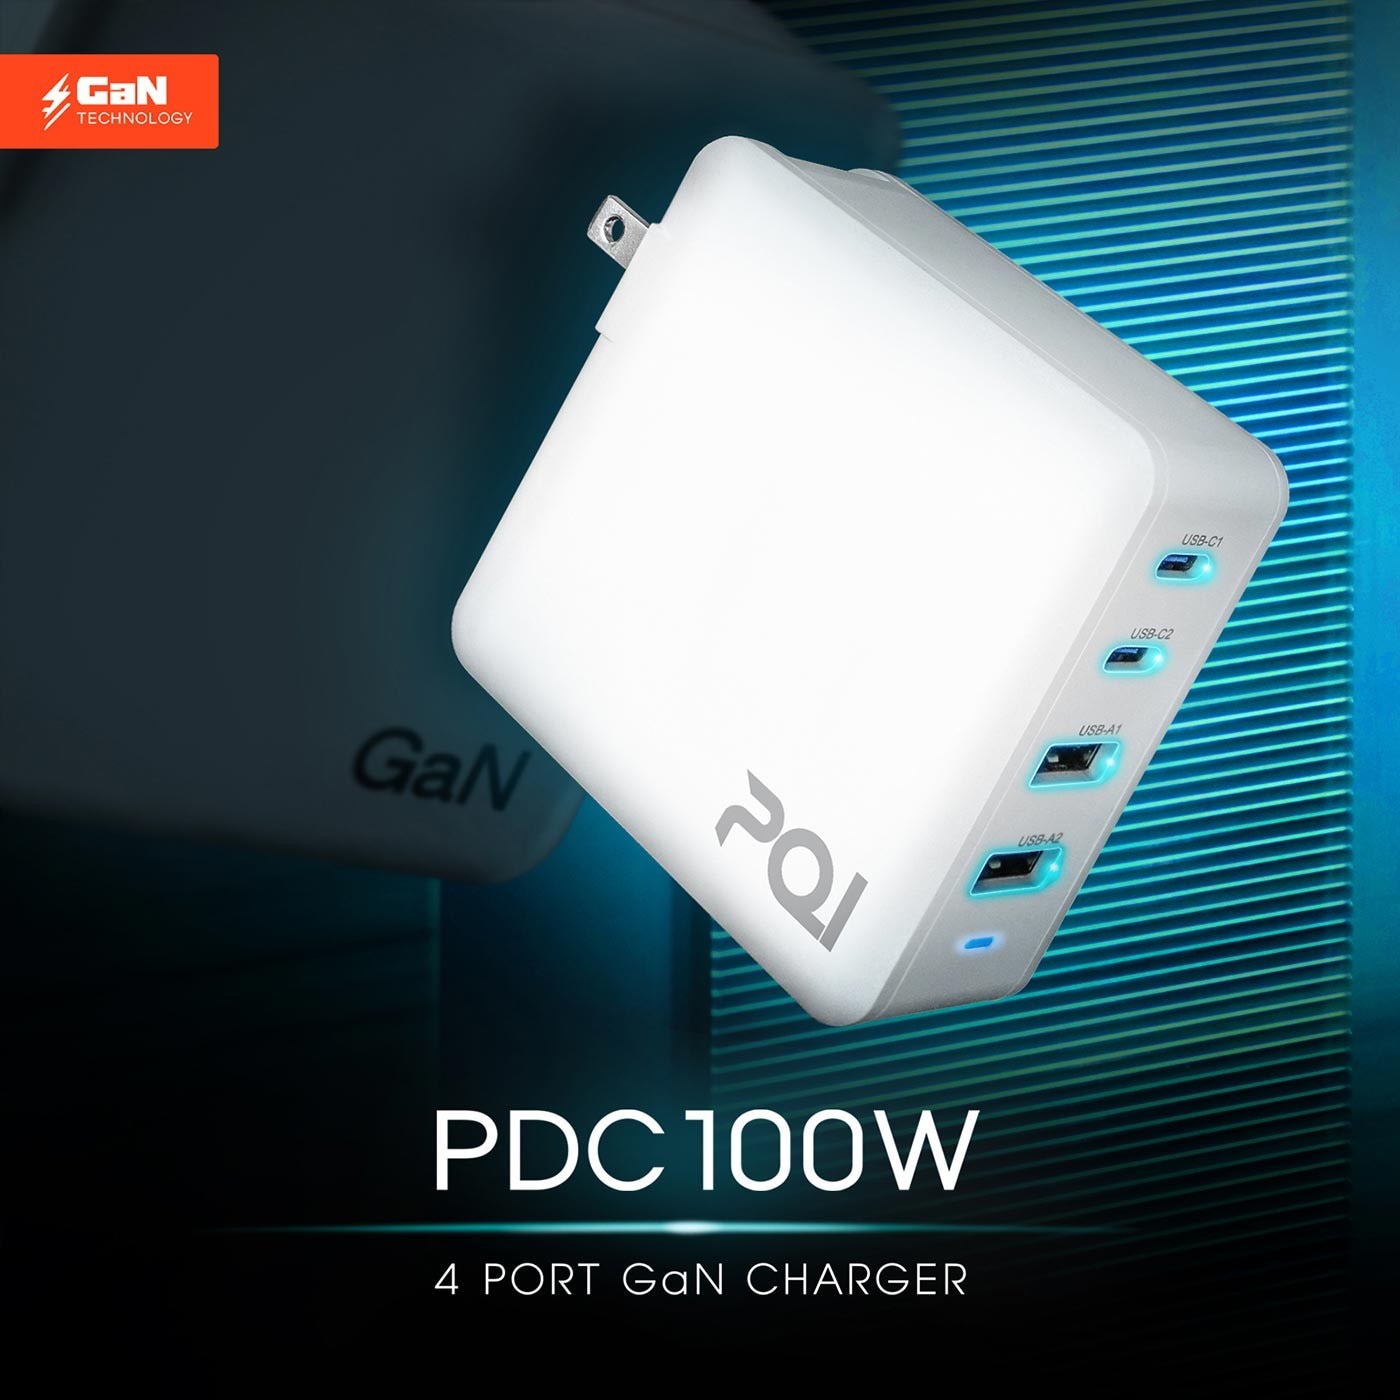 PQI 100W PD3.0 4孔氮化鎵GaN高速充電器附Type-C充電線1m，最多支援4台裝置同步快充，過熱保護、過電流保護、過充保護、過電壓保護，通過多國國際安規認證，確保夜間充電更安全。